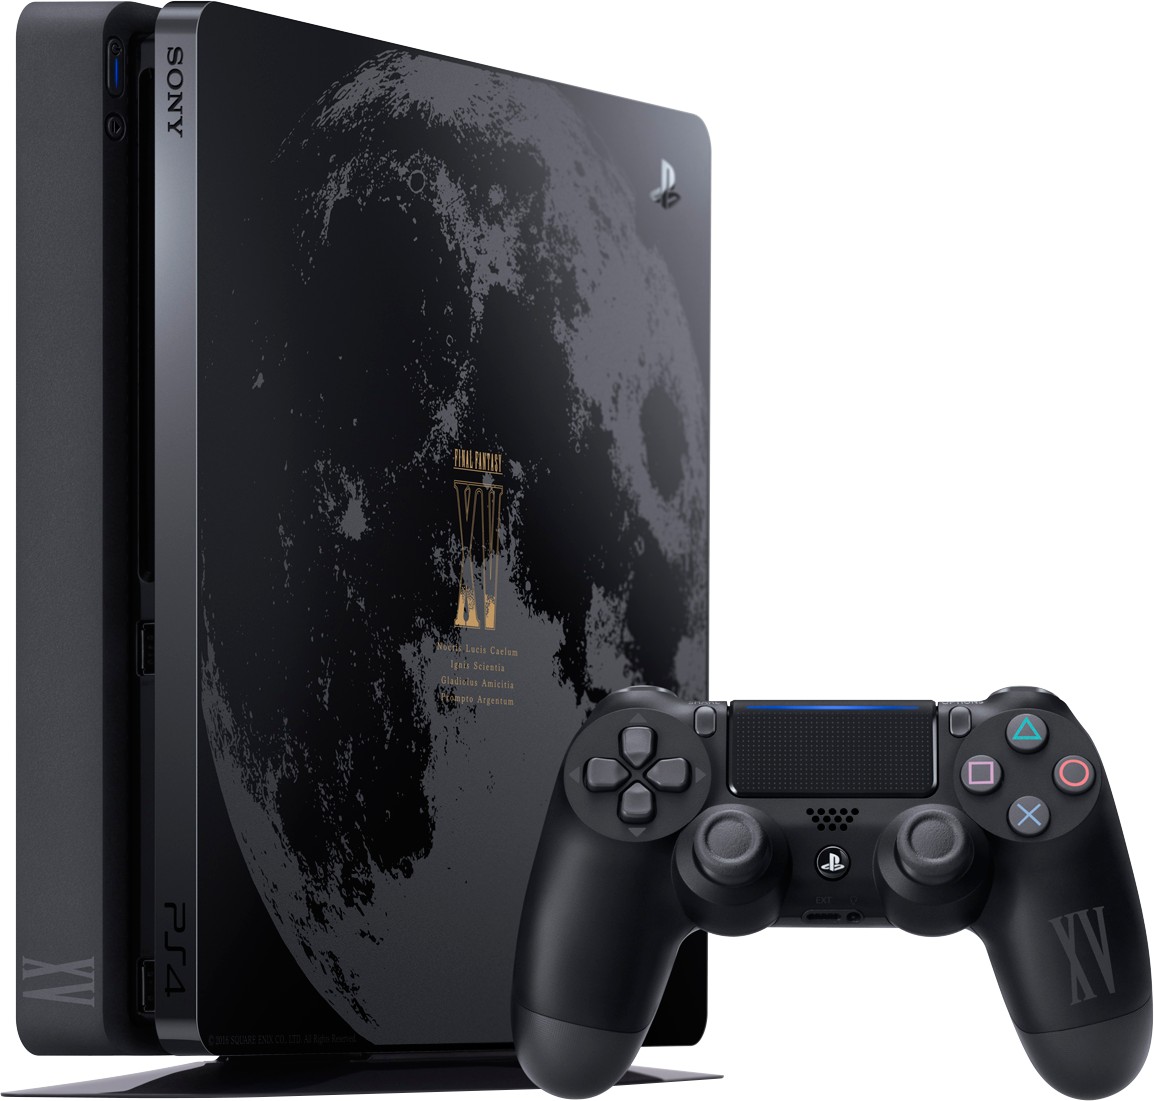 PlayStation 4 Slim (1TB, Black, Limited Edition) + Final Fantasy XV (Deluxe Edition)